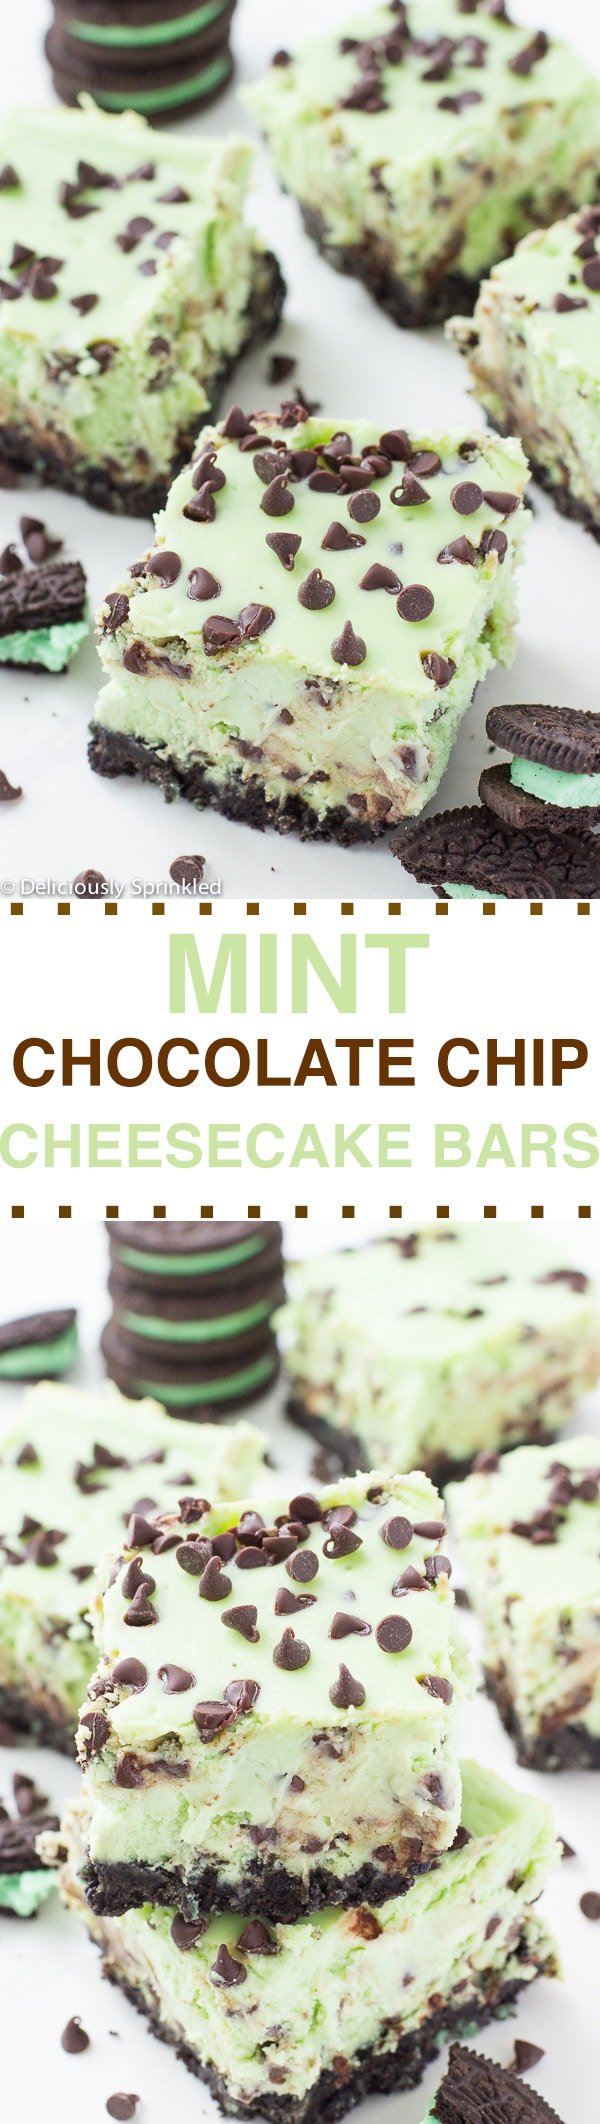 Mint Chocolate Chip Cheesecake Bars